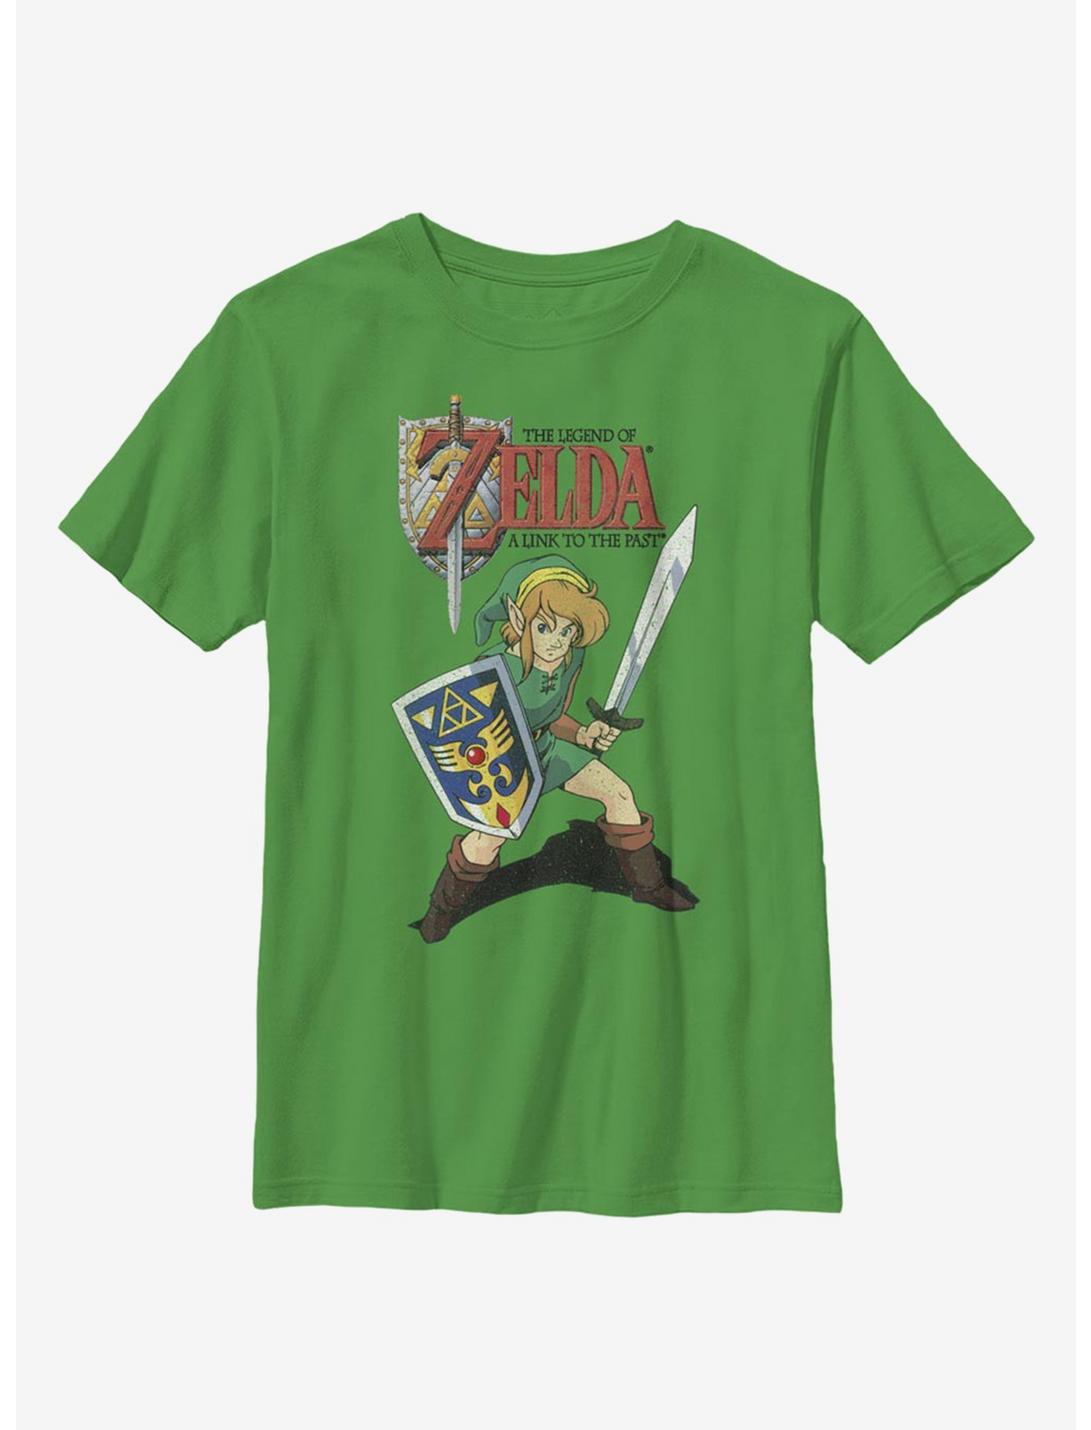 Nintendo The Legend Of Zelda Past Front Youth T-Shirt, KELLY, hi-res